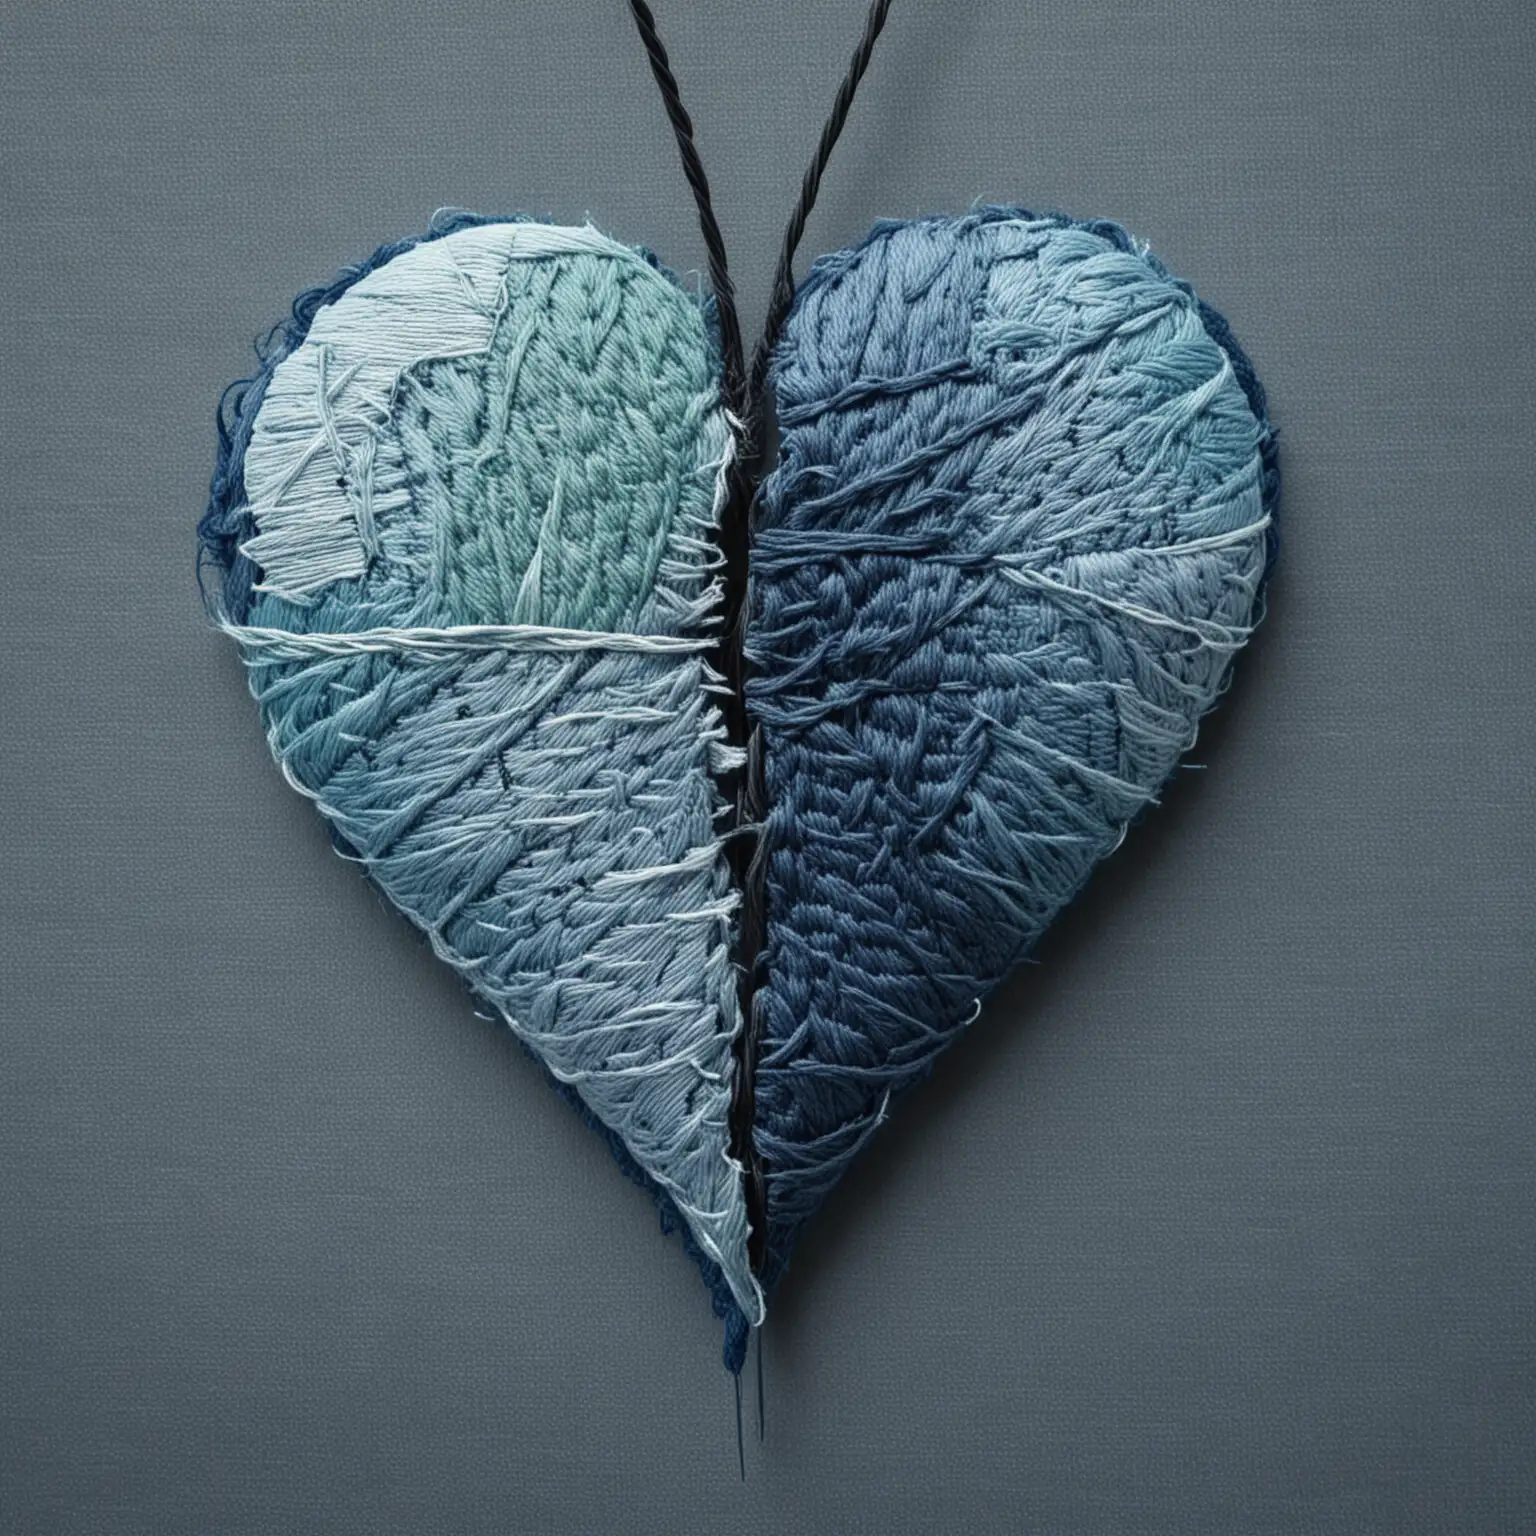 Sewn Broken Heart Art Vibrant Pastel Image of a Half Broken Heart Sewn with Black Thread